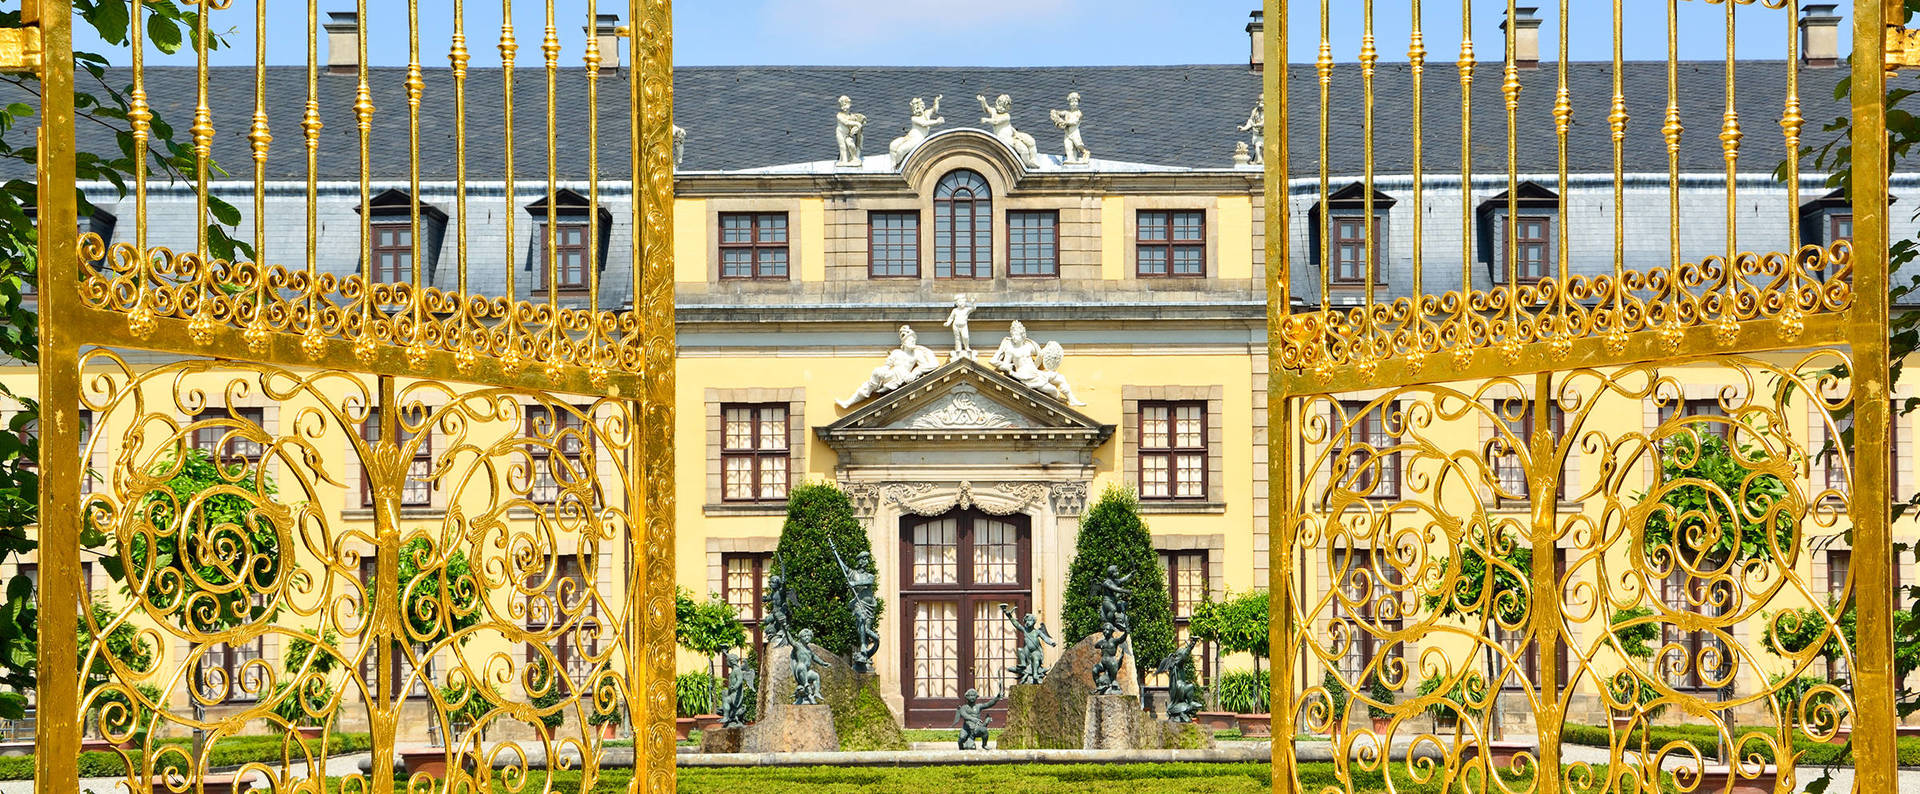 Goldenes Tor Herrenhäuser Gärten - H4 Hotel Hannover Messe - Offizielle Webseite